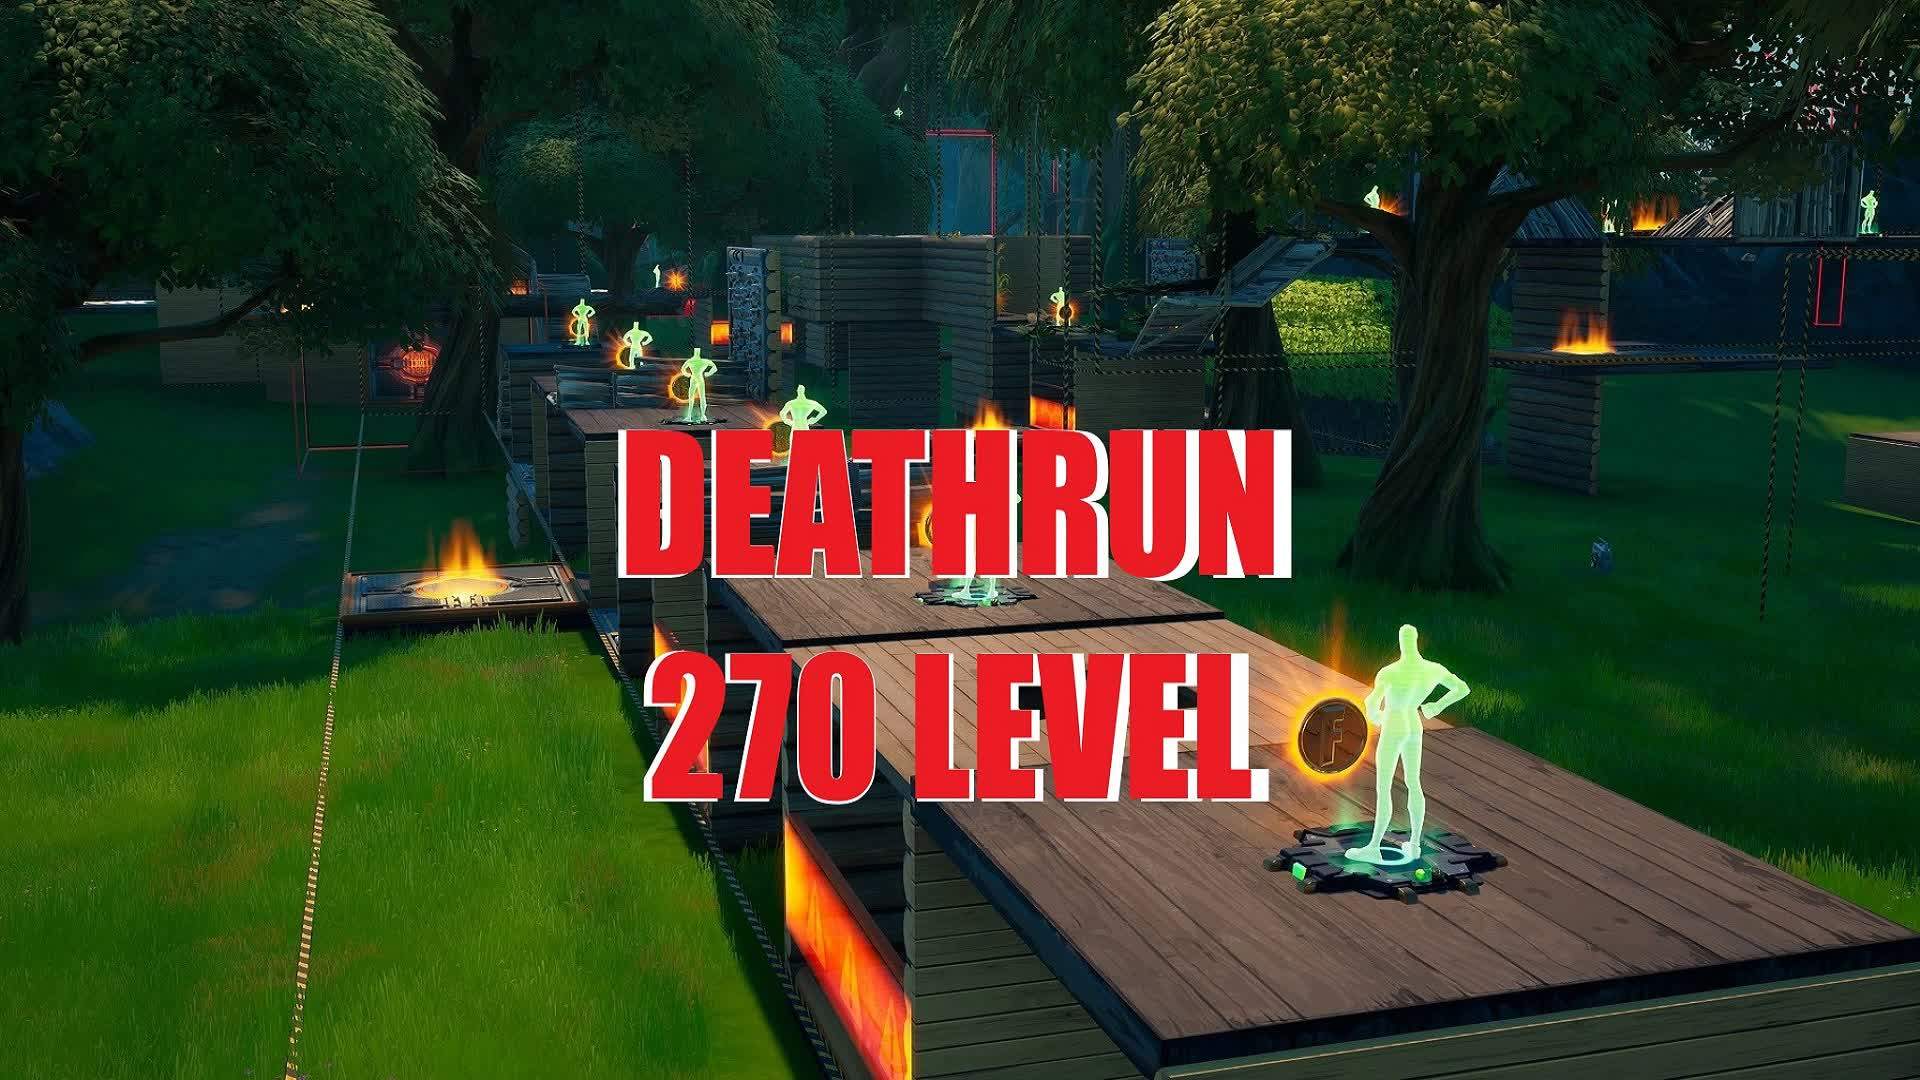 Deathrun 270 level - 10 biomes